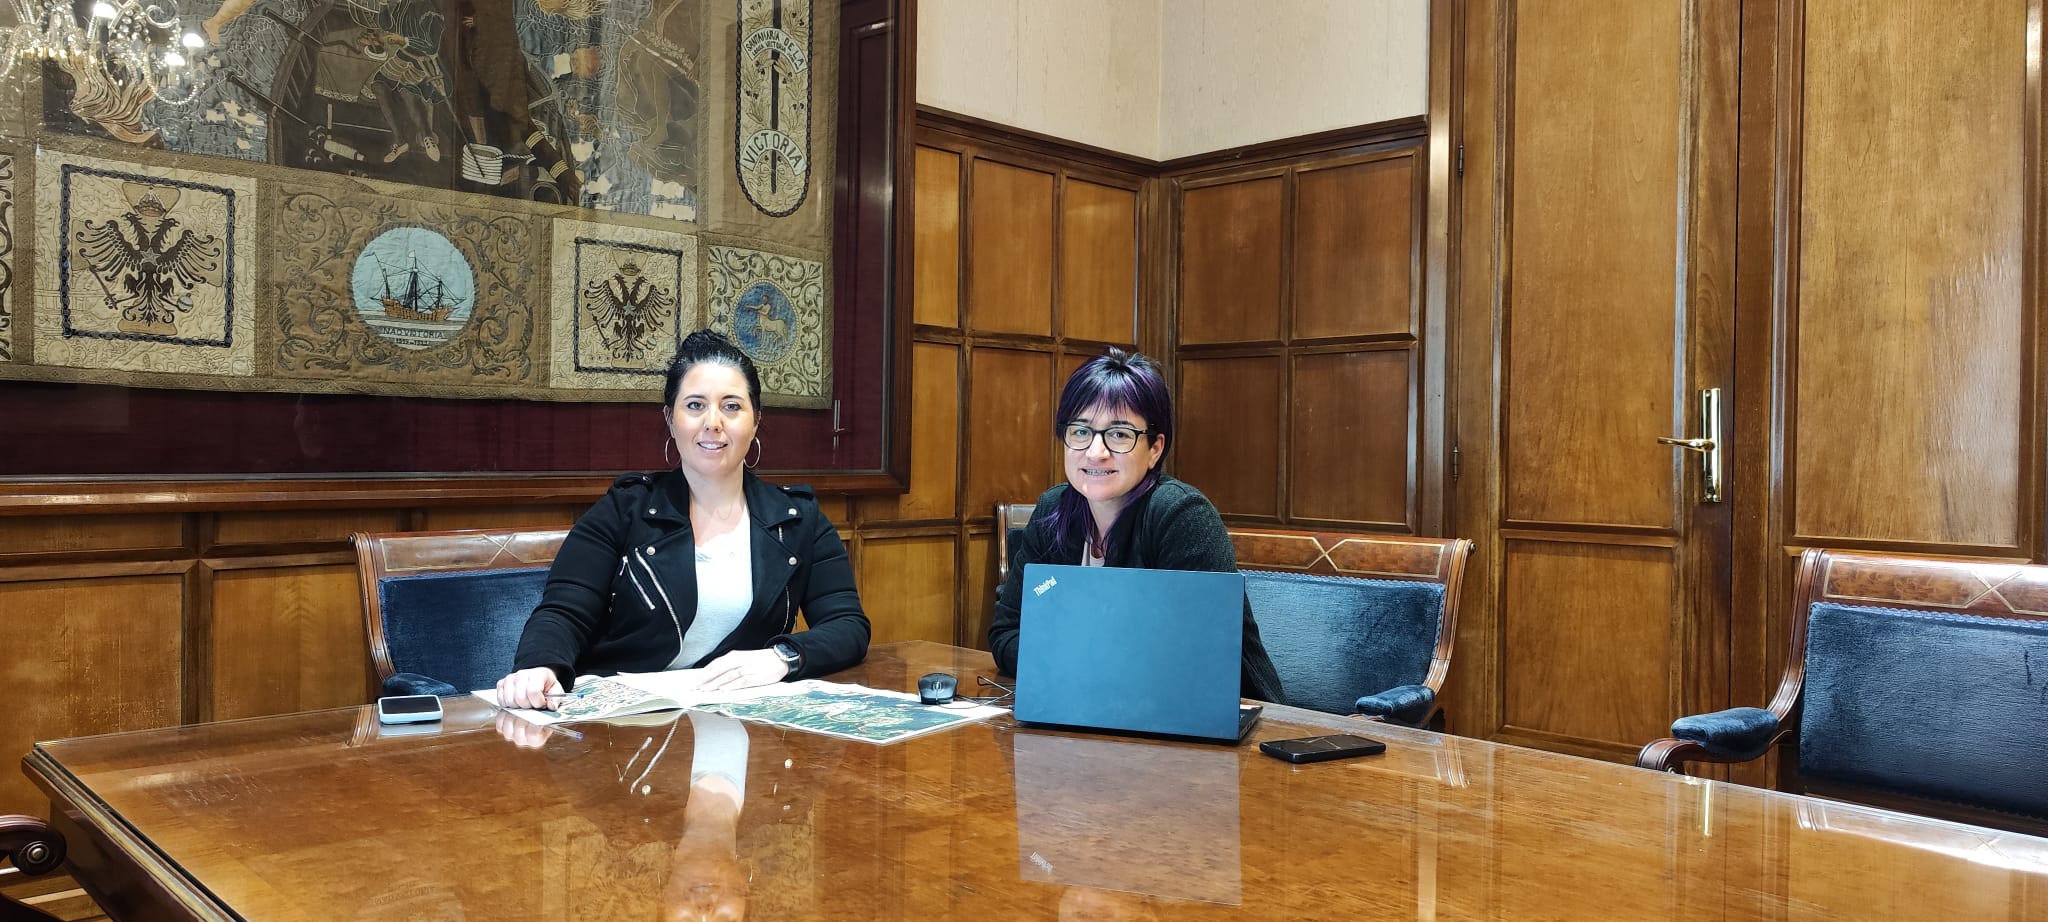 Reunión de la diputada Azahara Domínguez con la alcaldesa de Usurbil Agurtzane Solabarrieta.